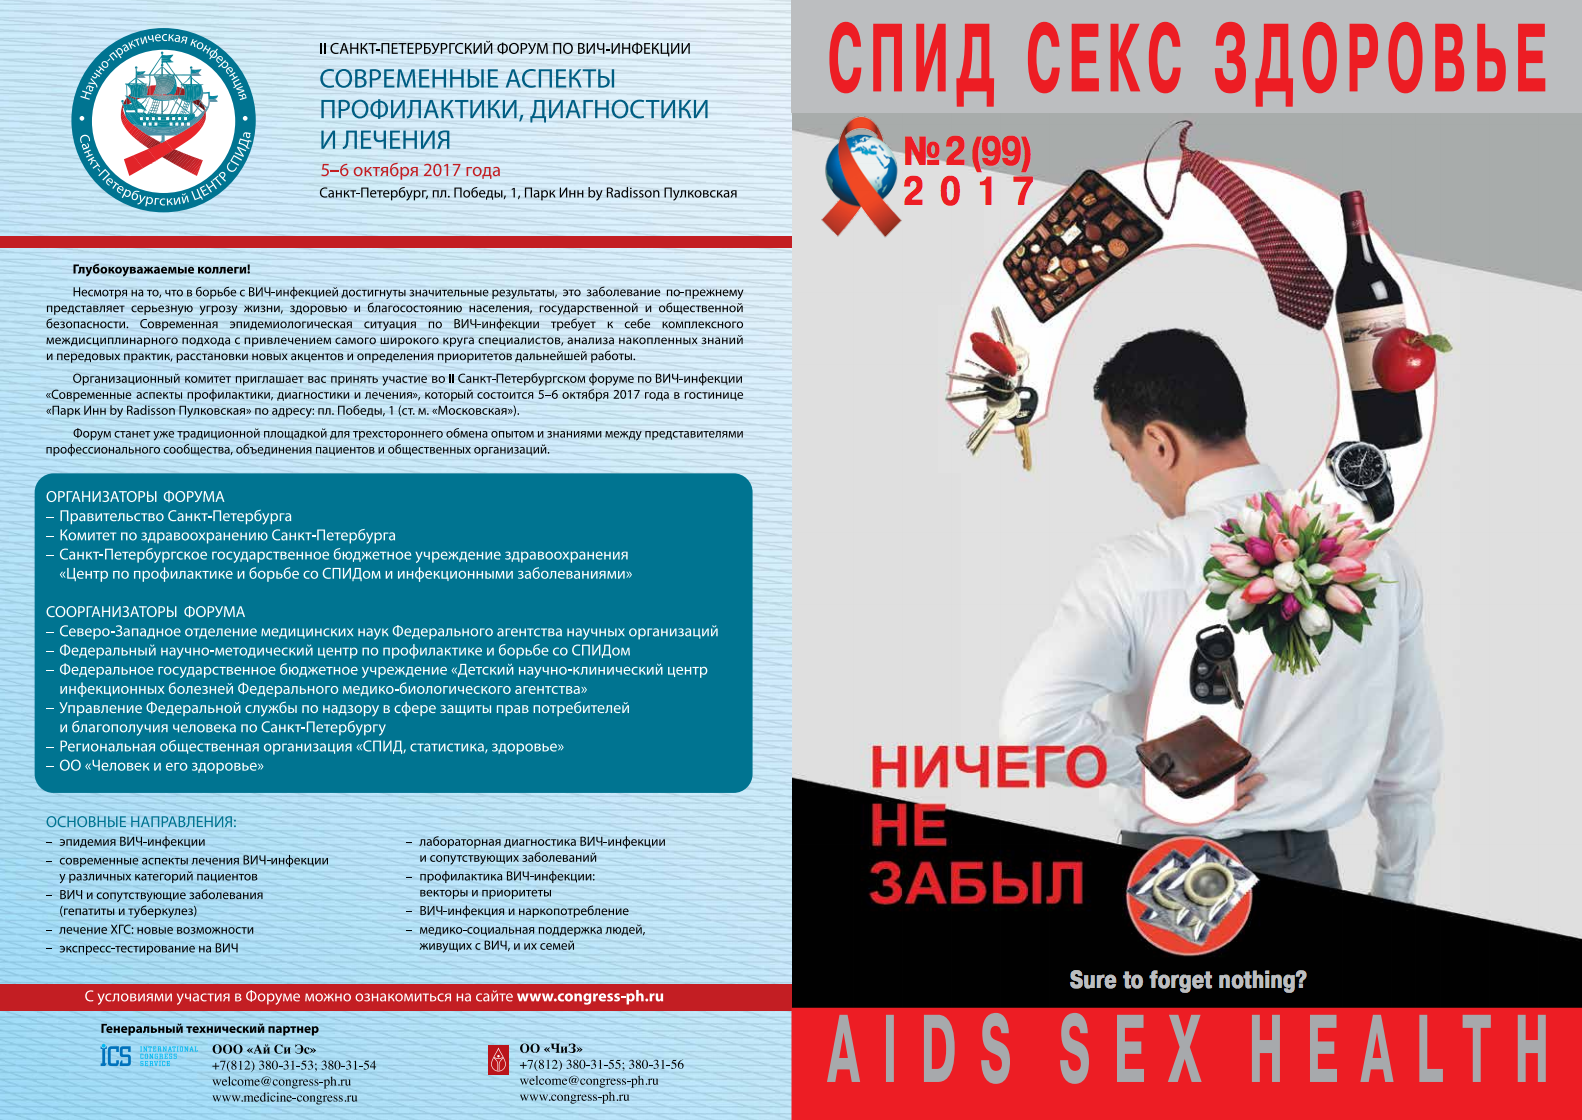 Сайт центра спид спб. ВИЧ И здоровье. Школа здоровья ВИЧ. Санкт-Петербургский центр СПИД\. Центр профилактики СПИДА СПБ.